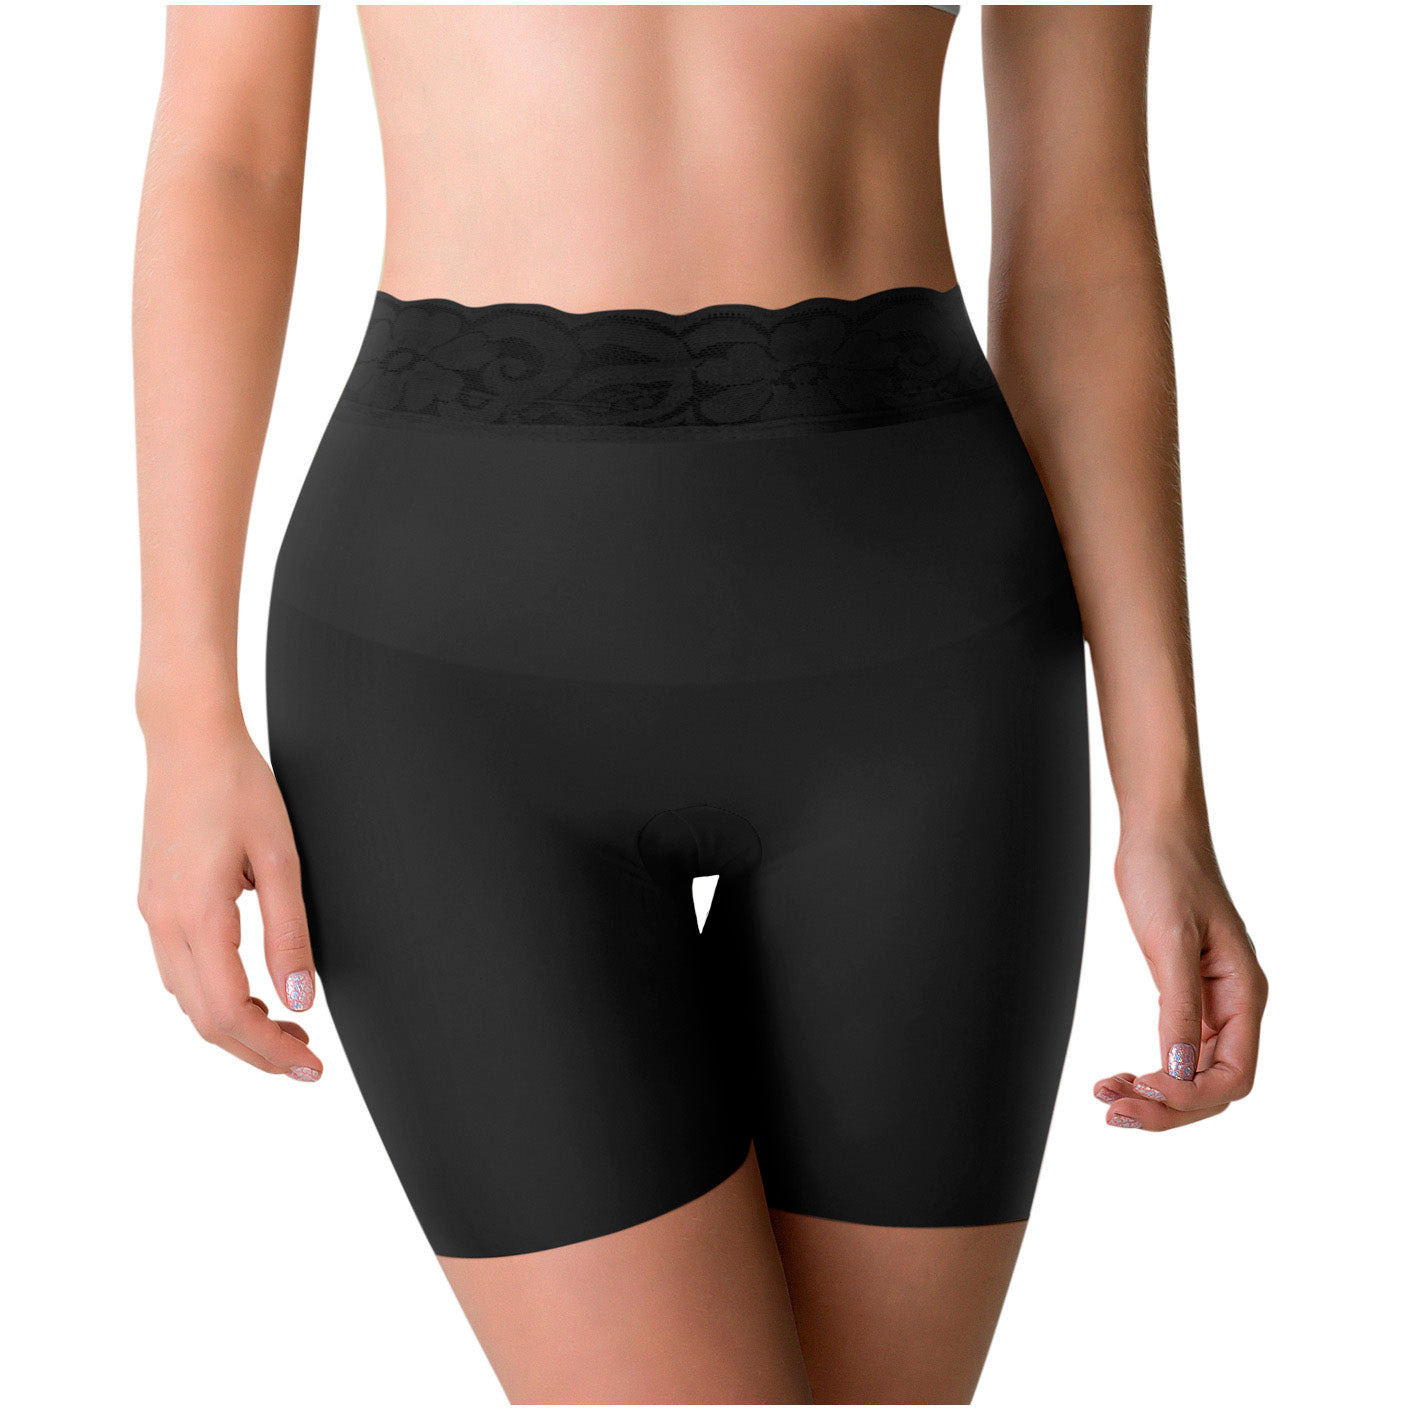 ROMANZA 2054 - Women's Colombian Slimming Shaper Shorts